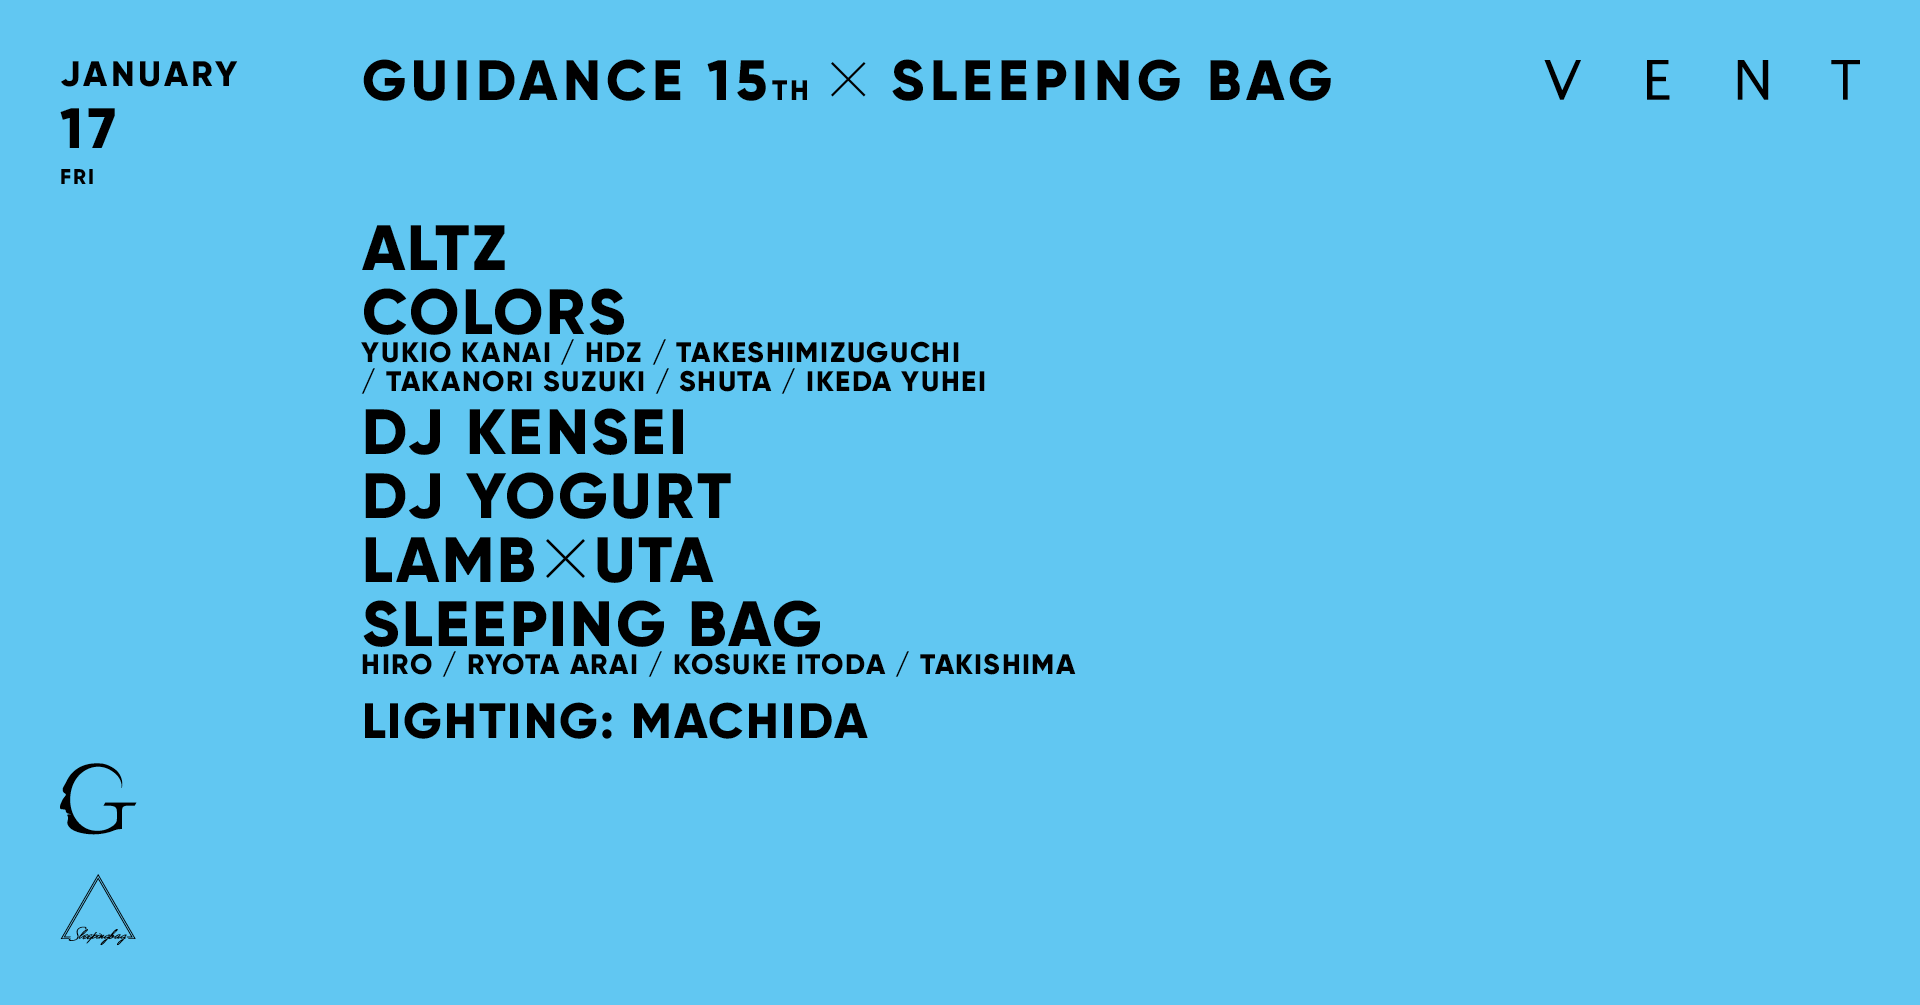 GUIDANCE 15th × SLEEPING BAG